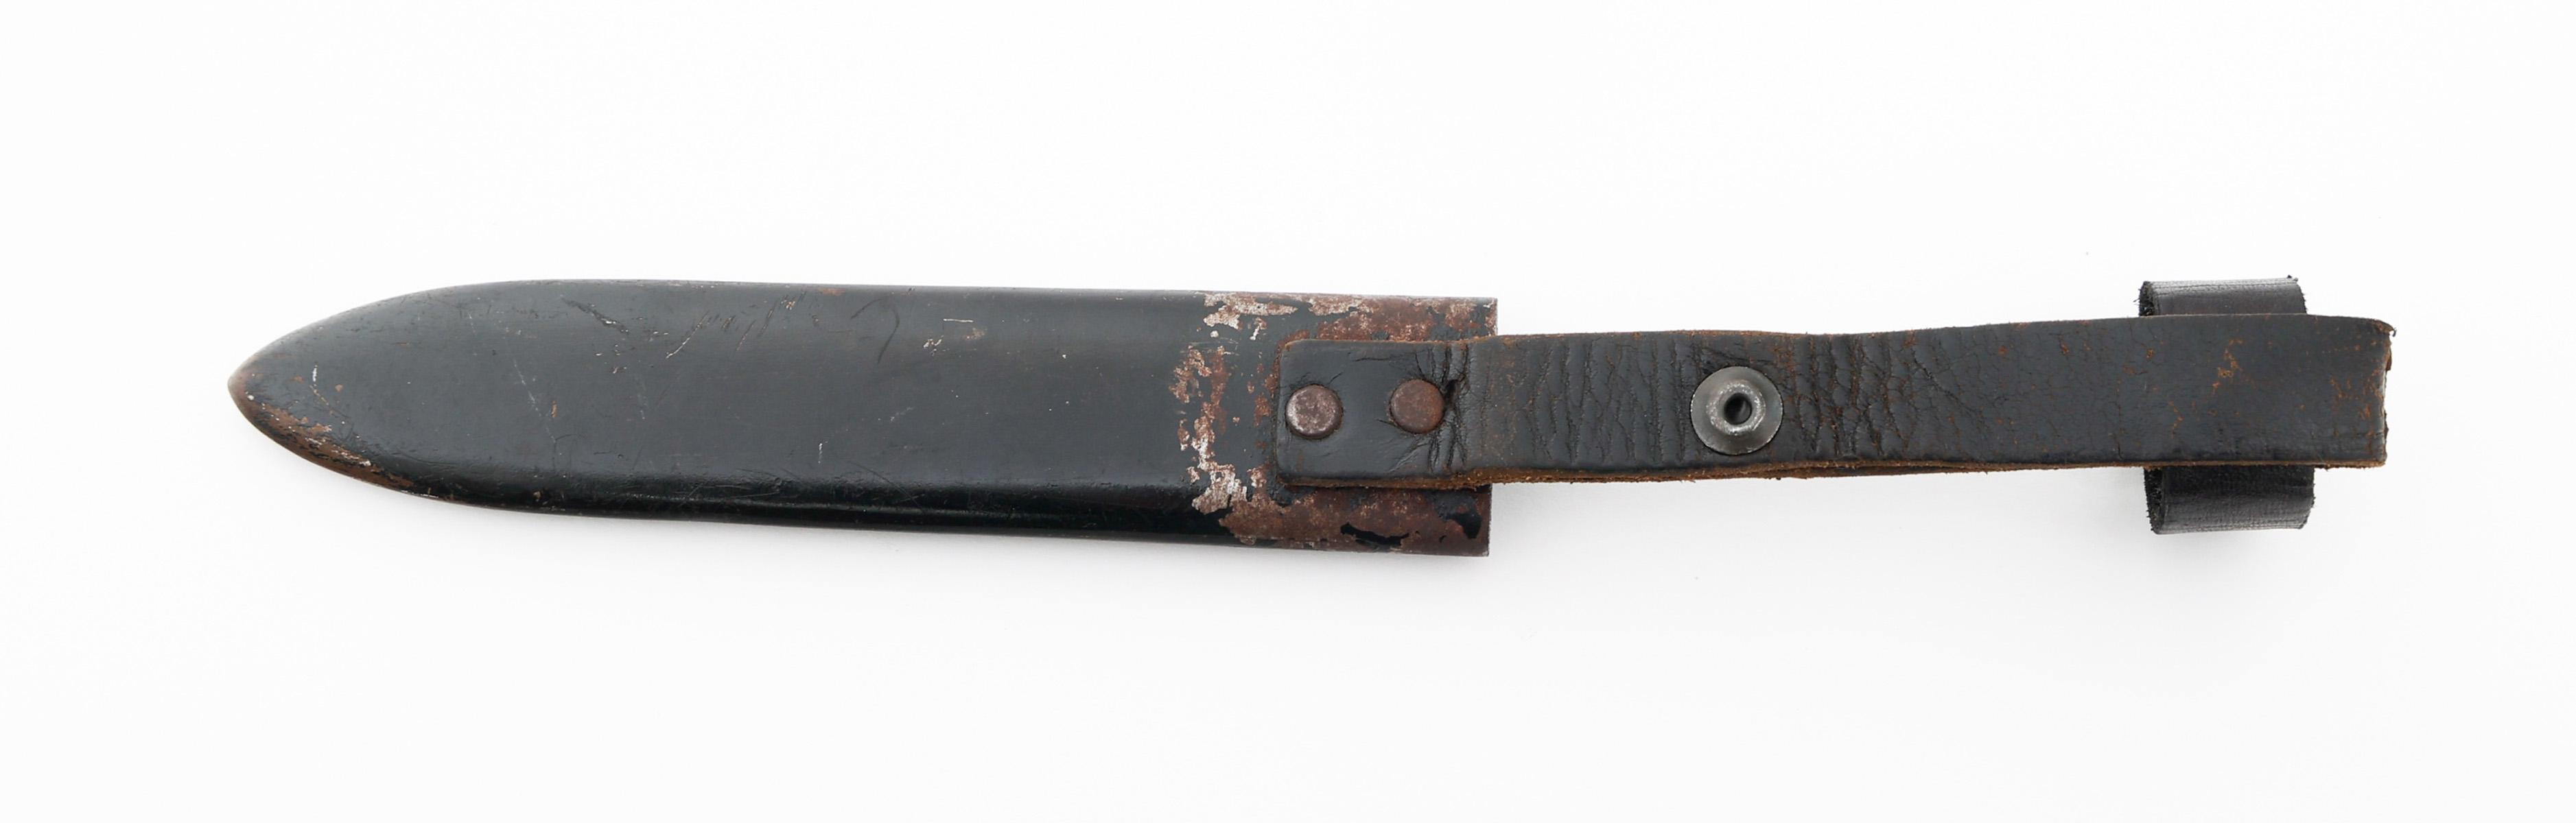 POST WWII GERMAN HUNTING KNIFE by HUBERTUS